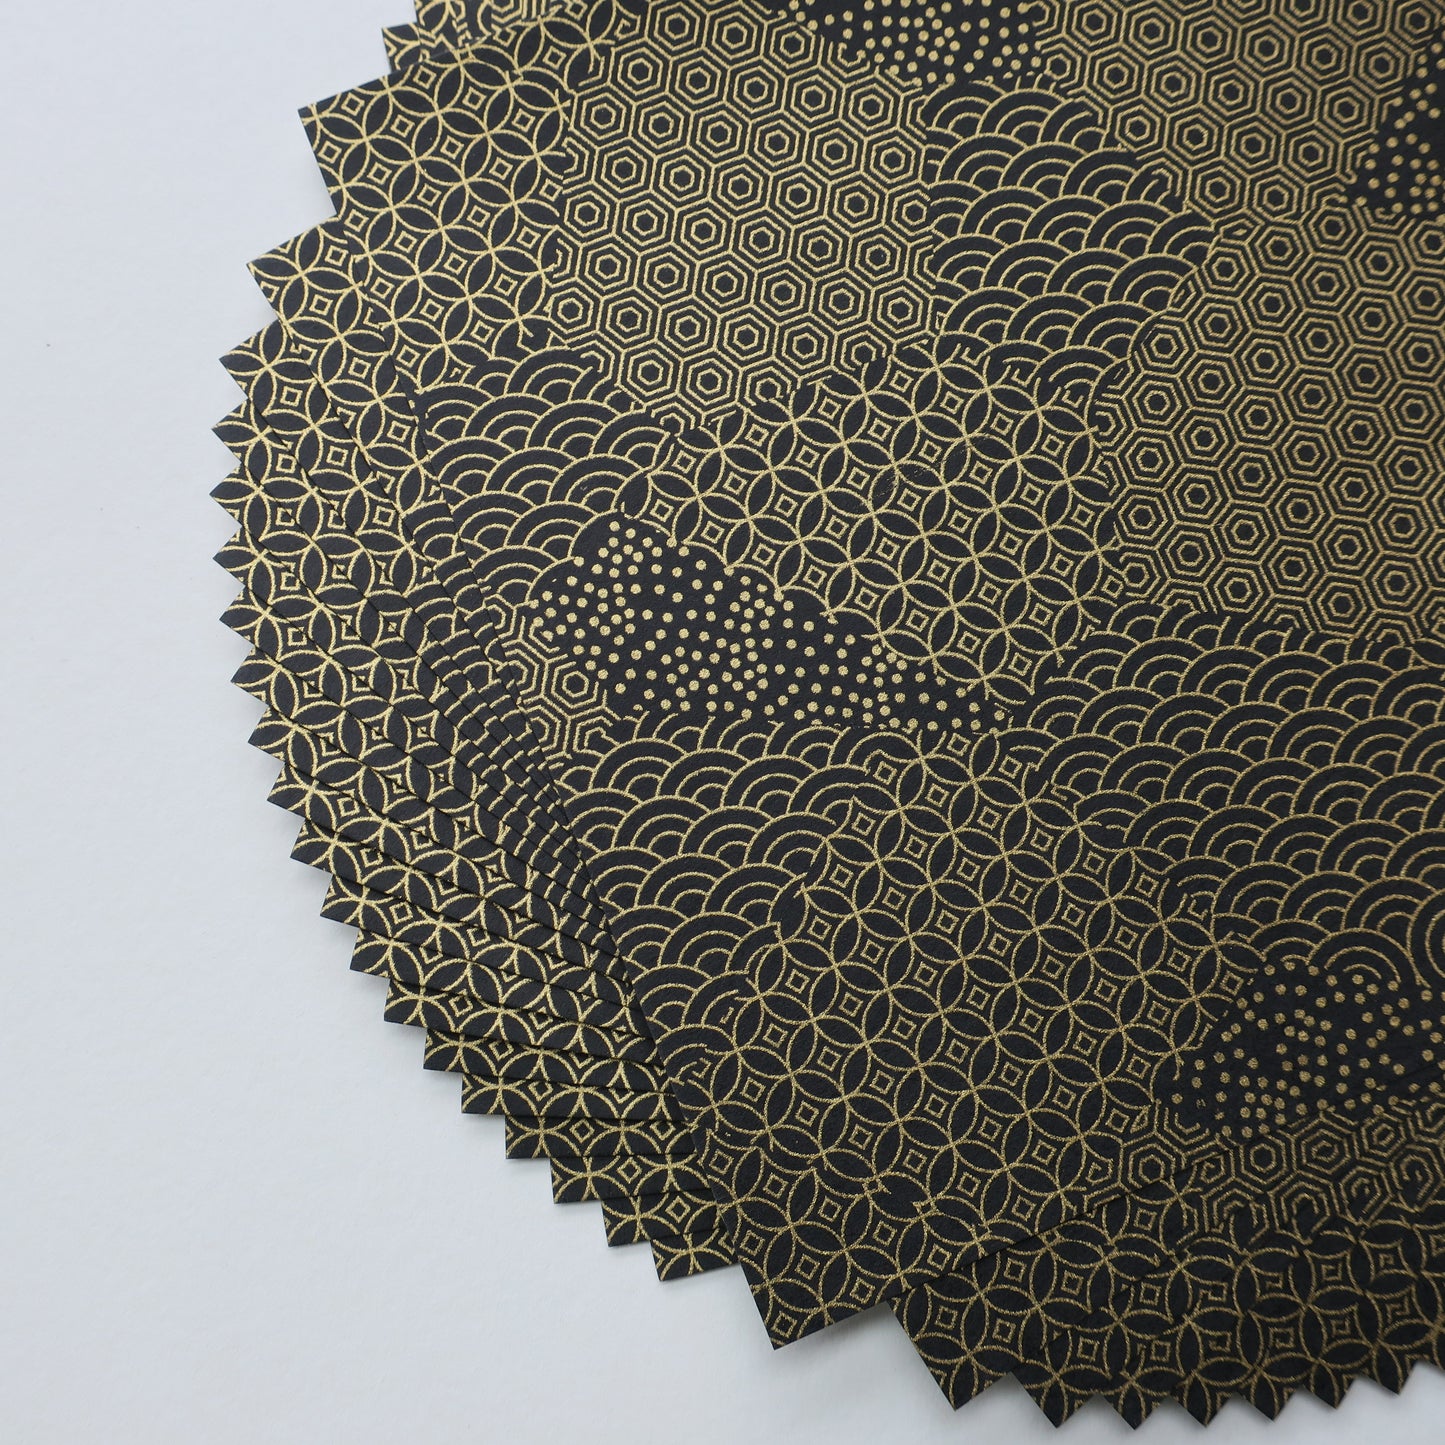 Pack of 20 Sheets 14x14cm Yuzen Washi Origami Paper HZ-496 - Black Gold Mixed Geometric Patterns